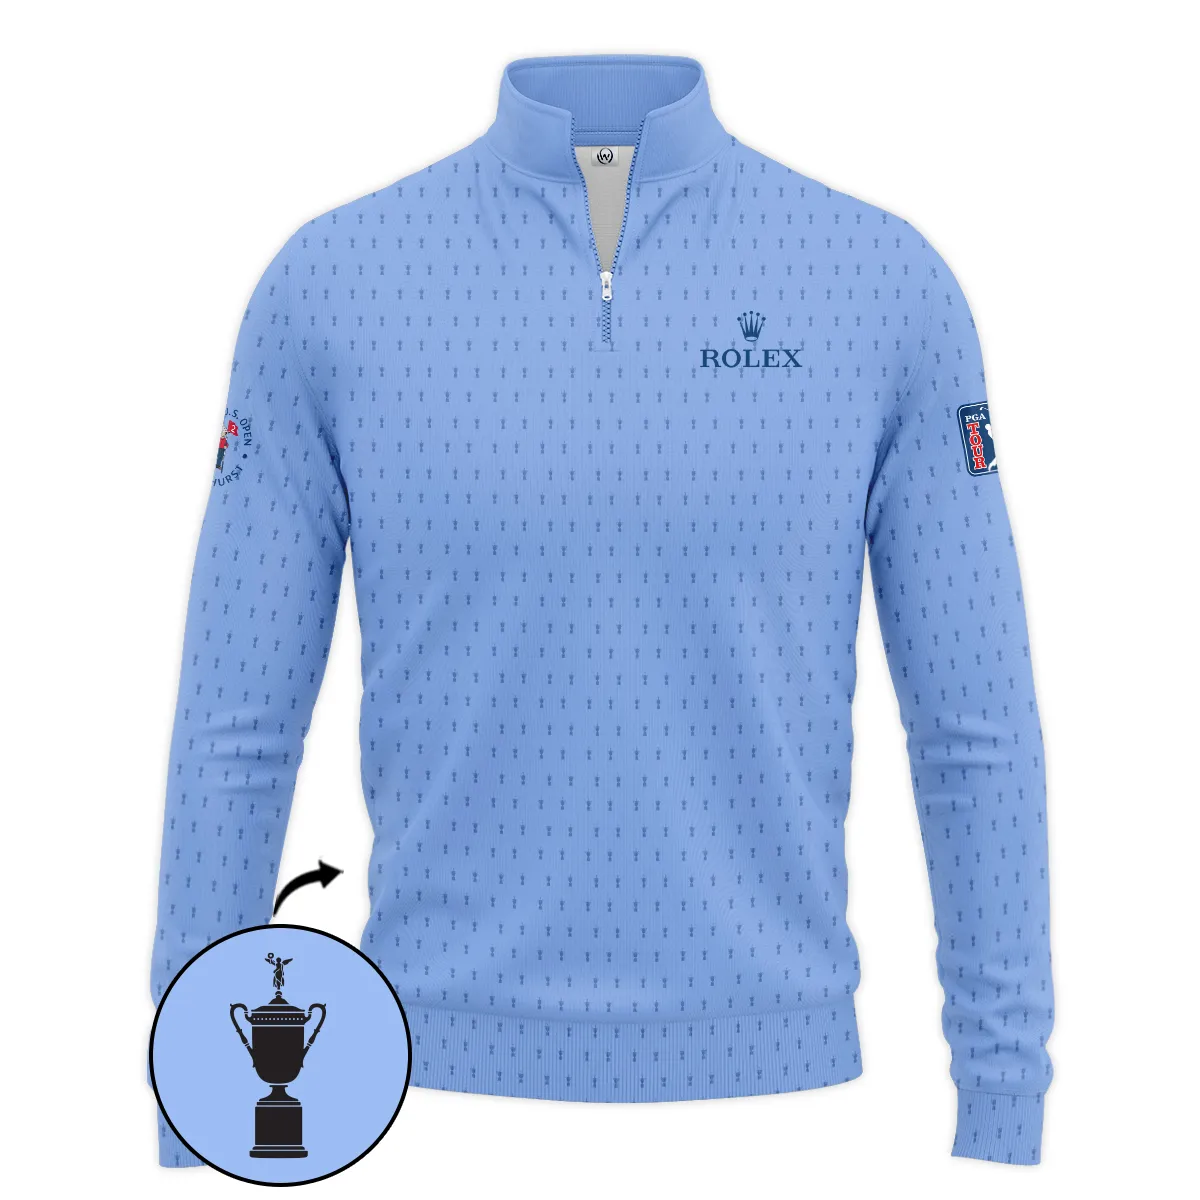 Golf Pattern Cup Blue 124th U.S. Open Pinehurst Pinehurst Rolex Quarter-Zip Jacket Style Classic